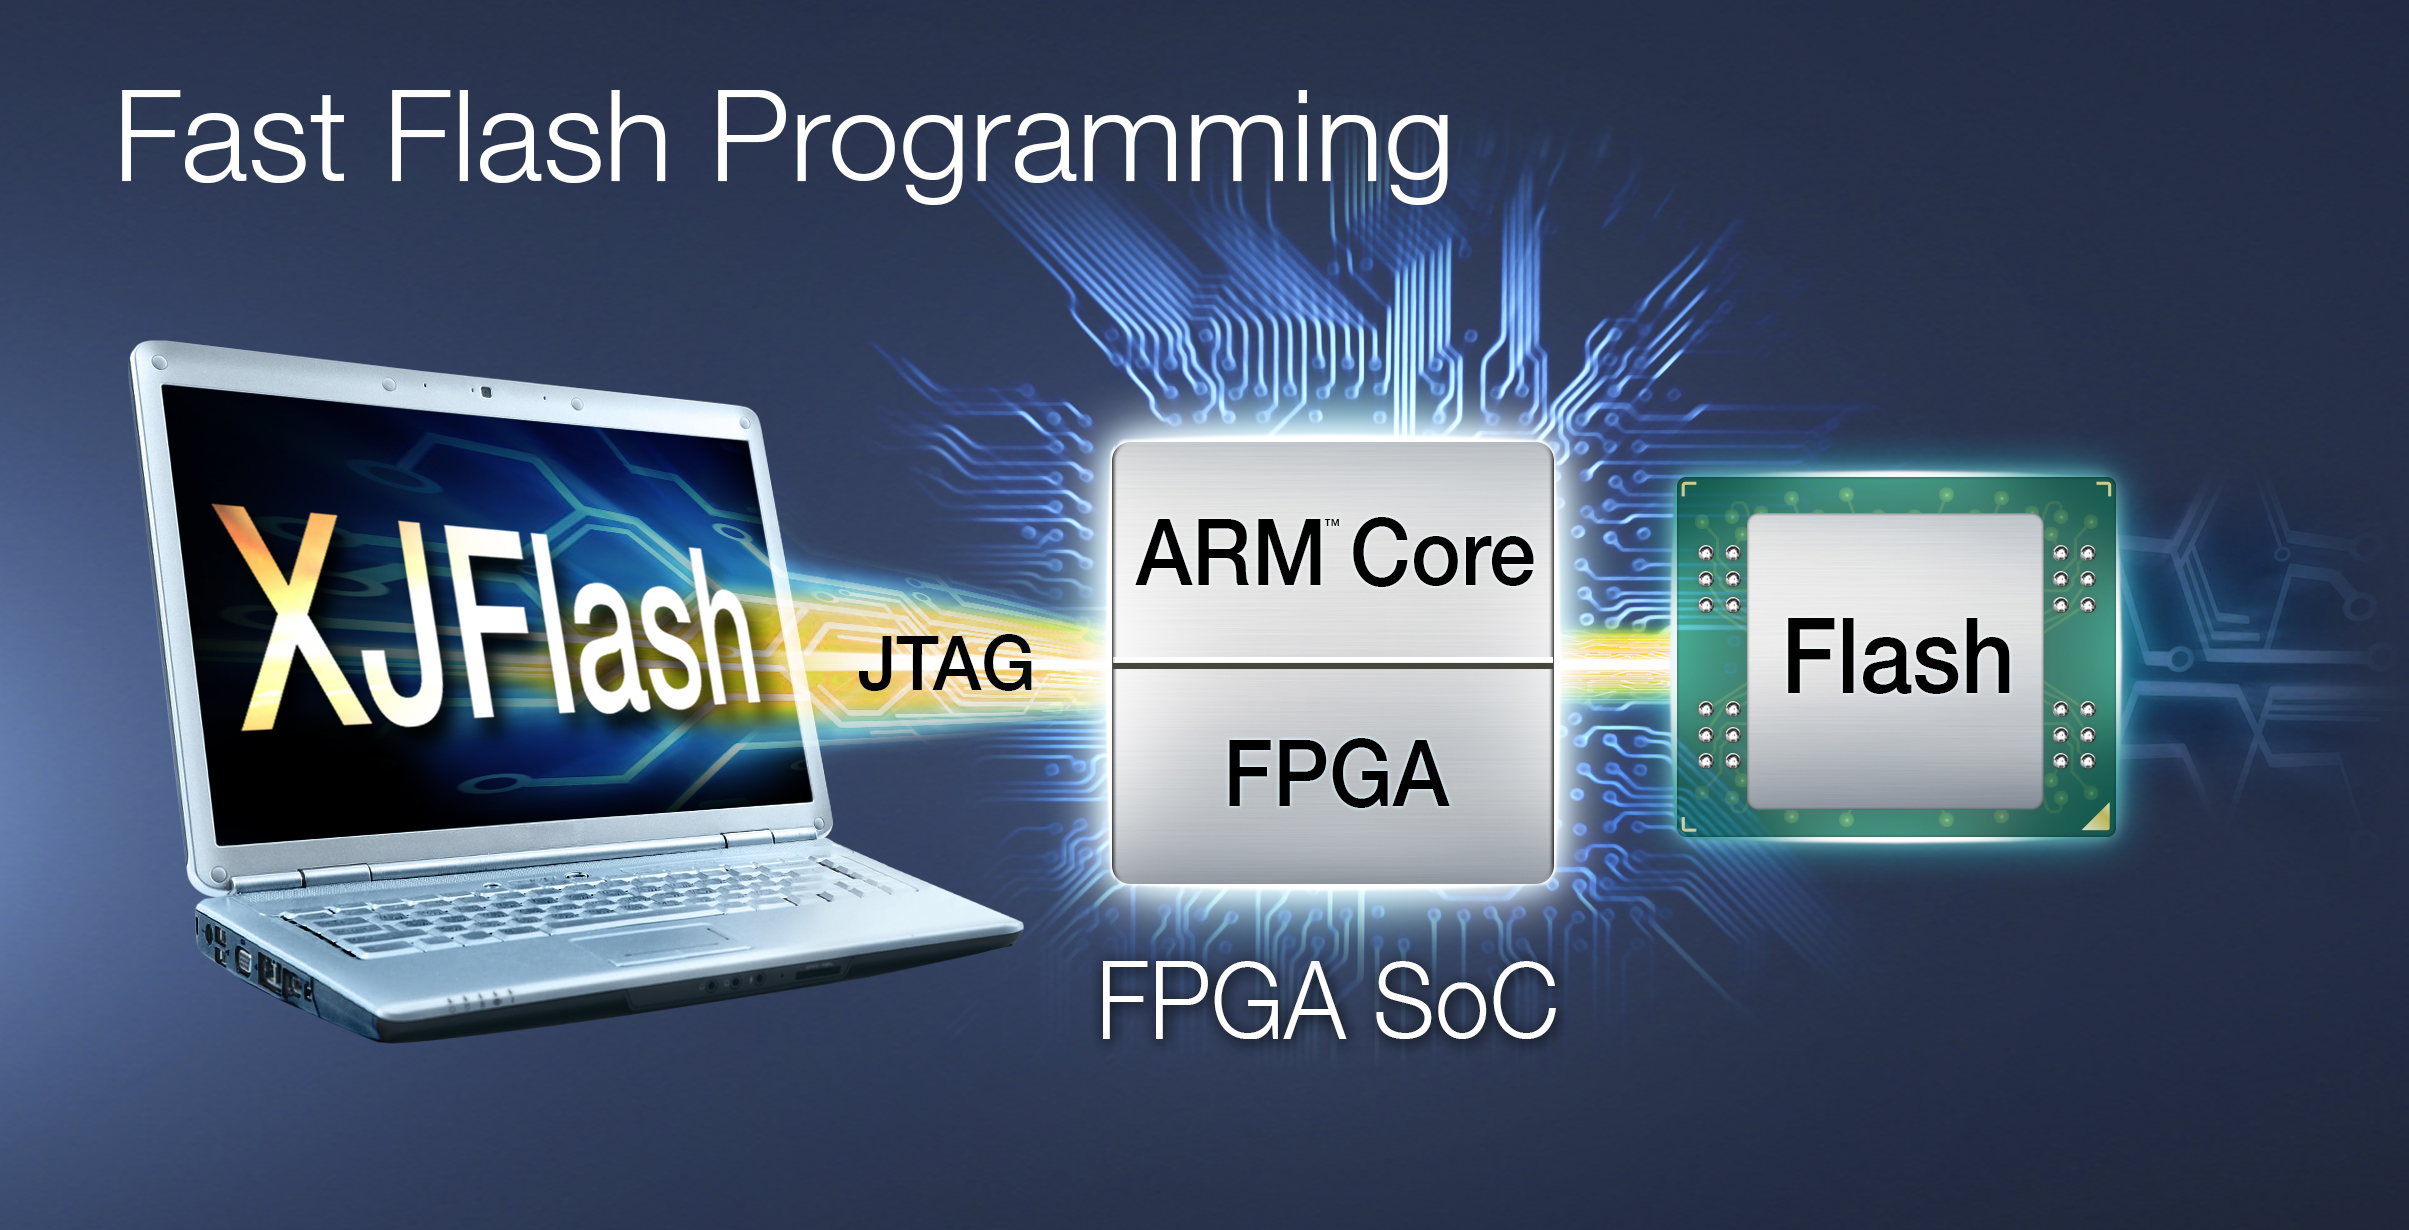 ISP Flash. Flash programming